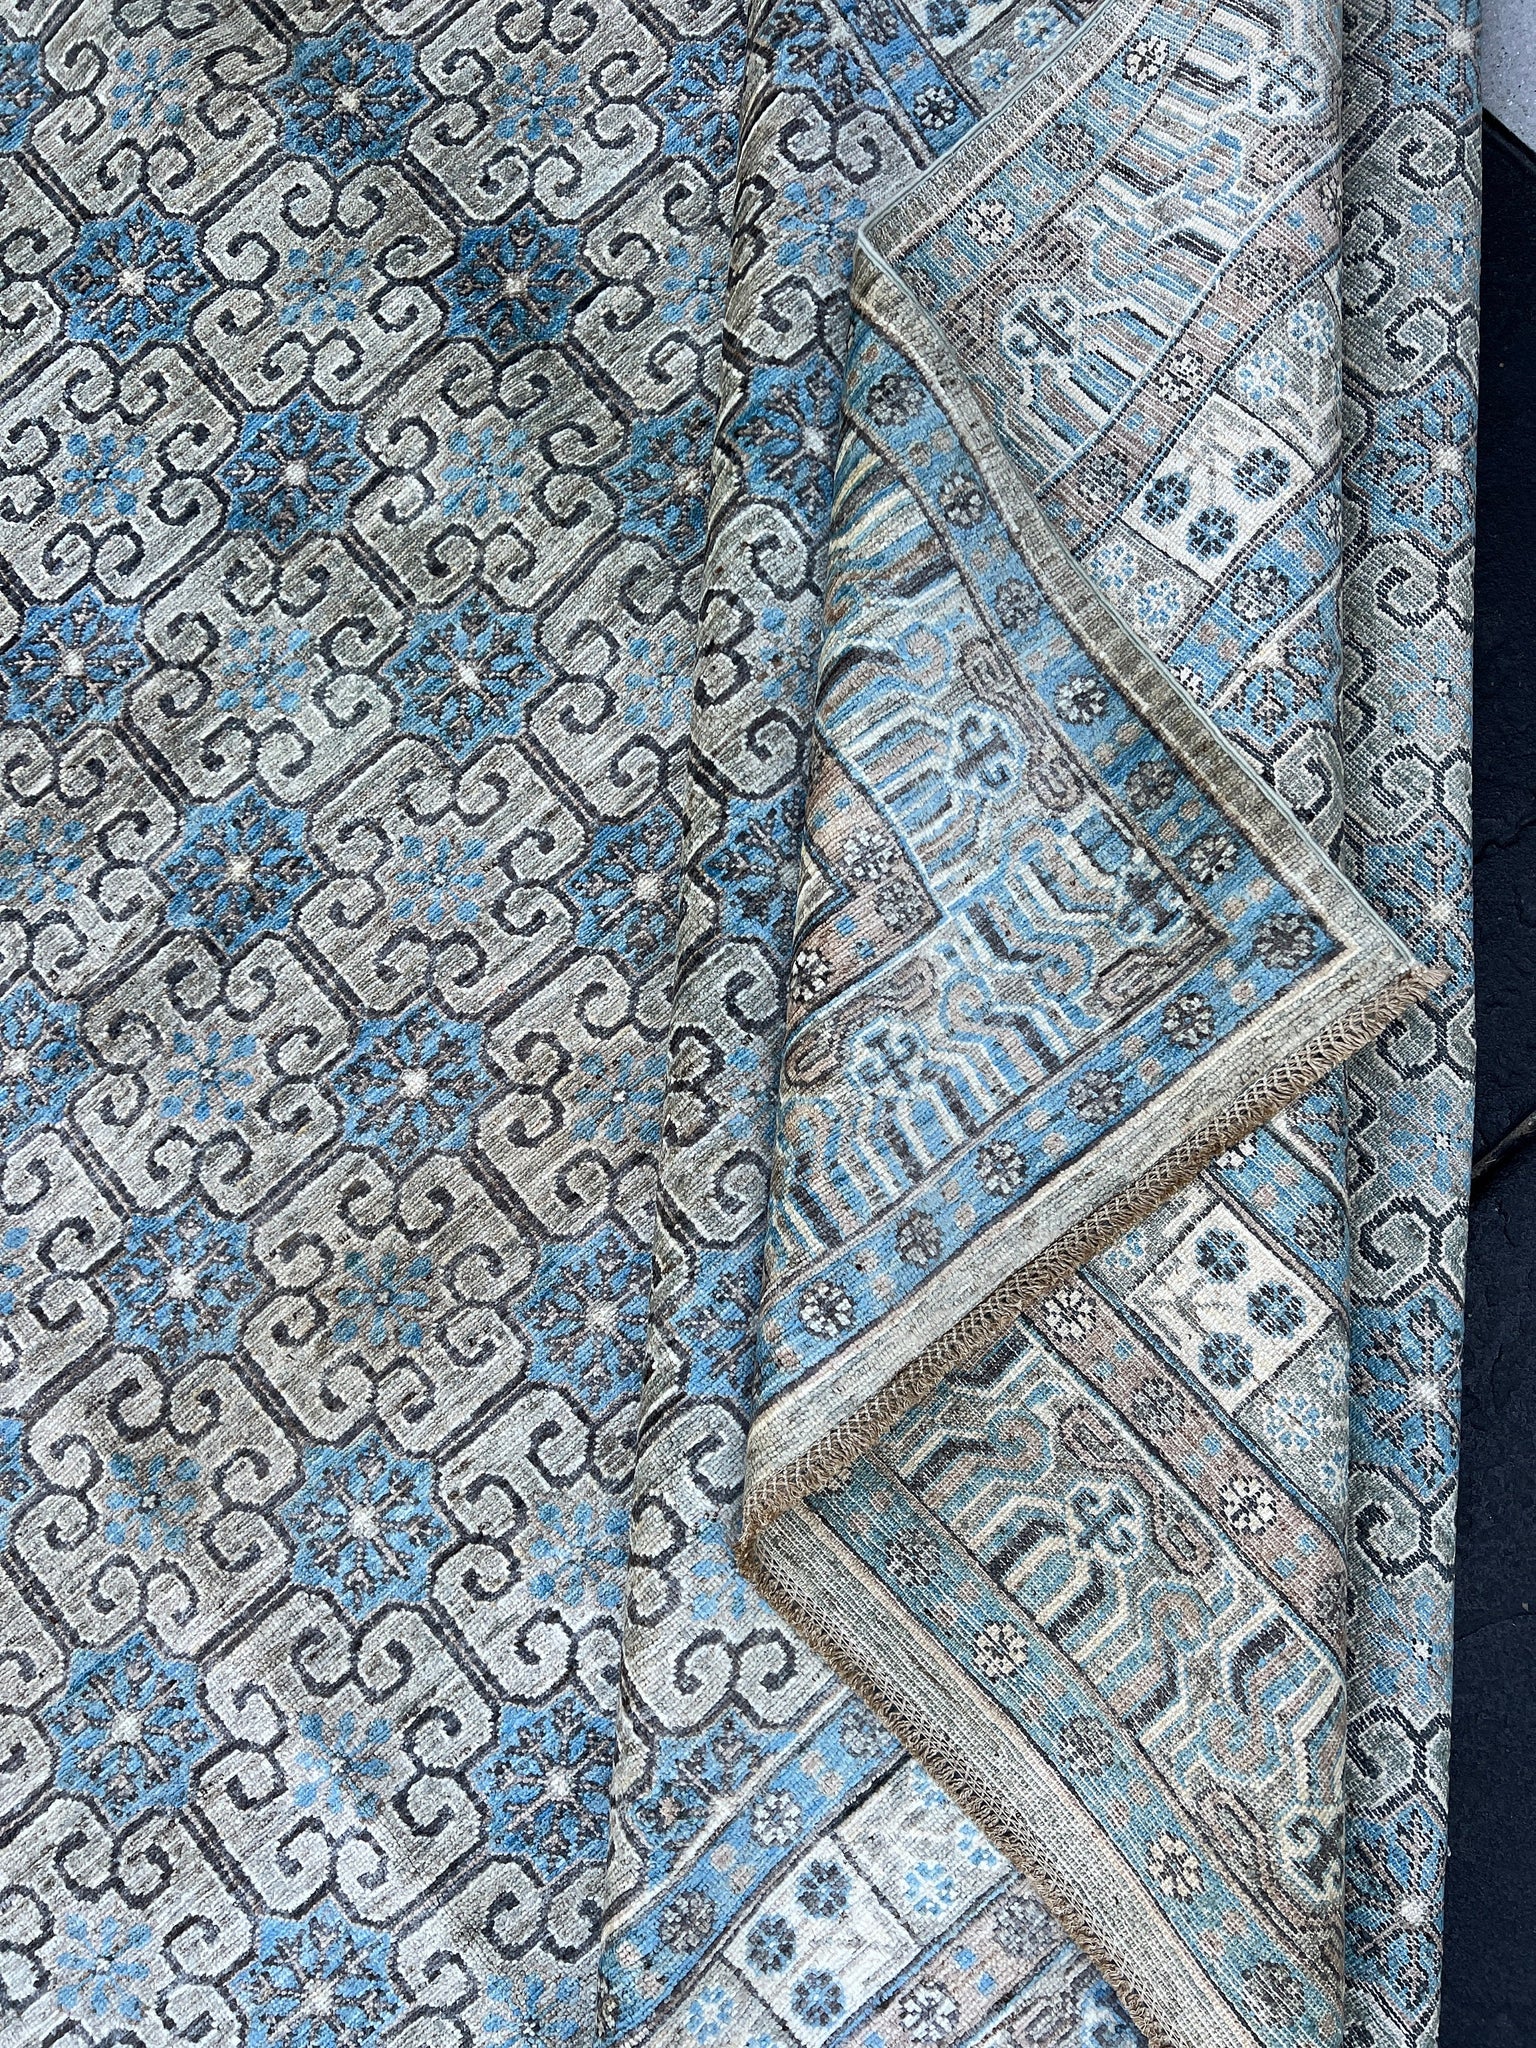 10x13 Handmade Afghan Rug | Green Grey Greige Navy Sky Blue Cream Ivory Charcoal Grey Tan Brown | Khotan Oriental Knotted Turkish Persian